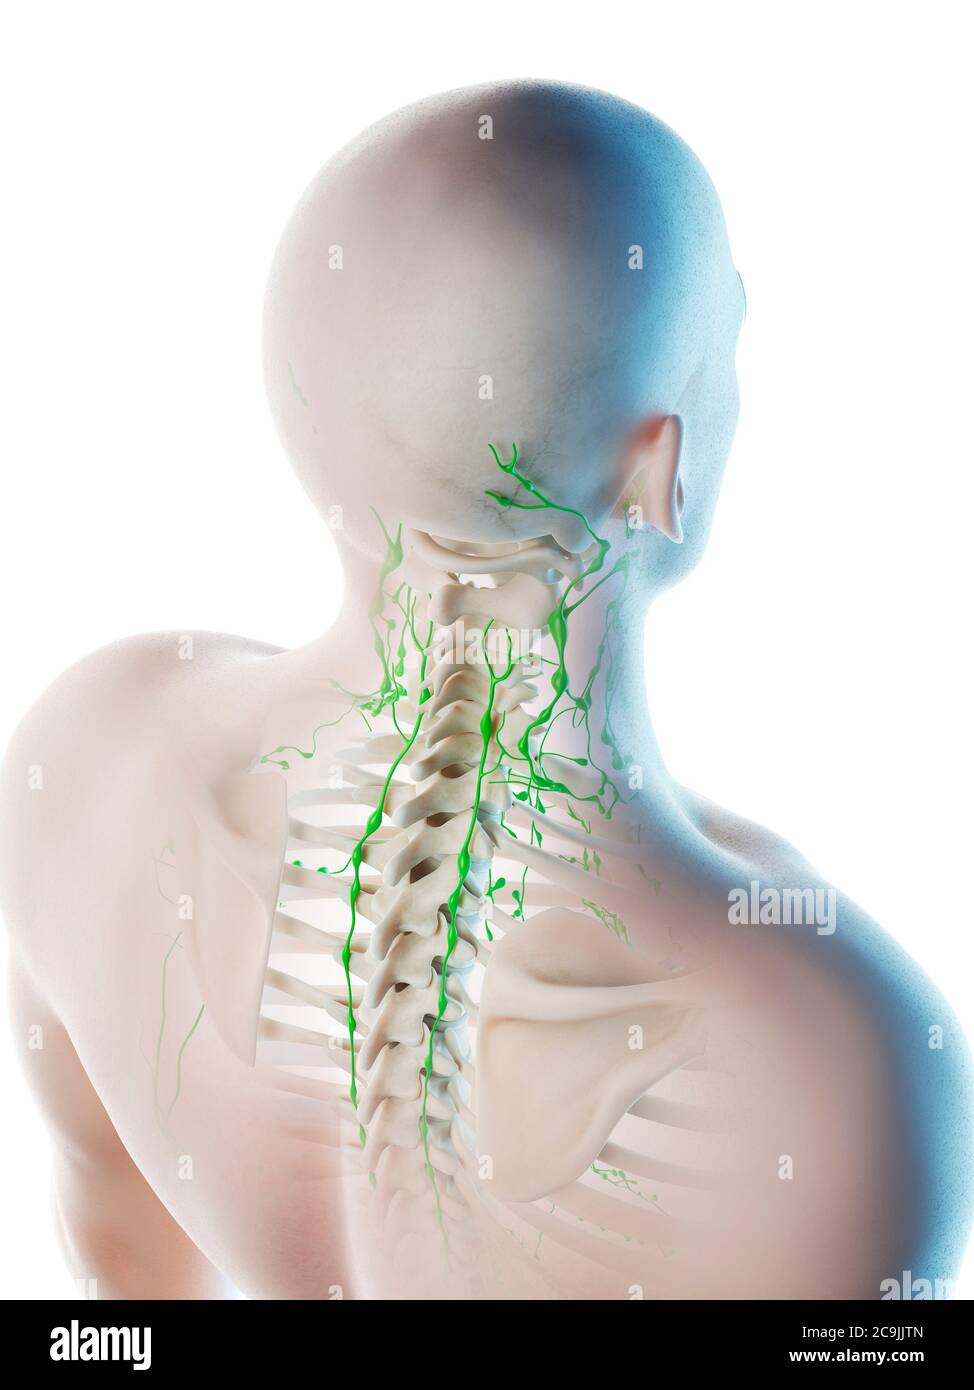 hard lymph nodes on back of head